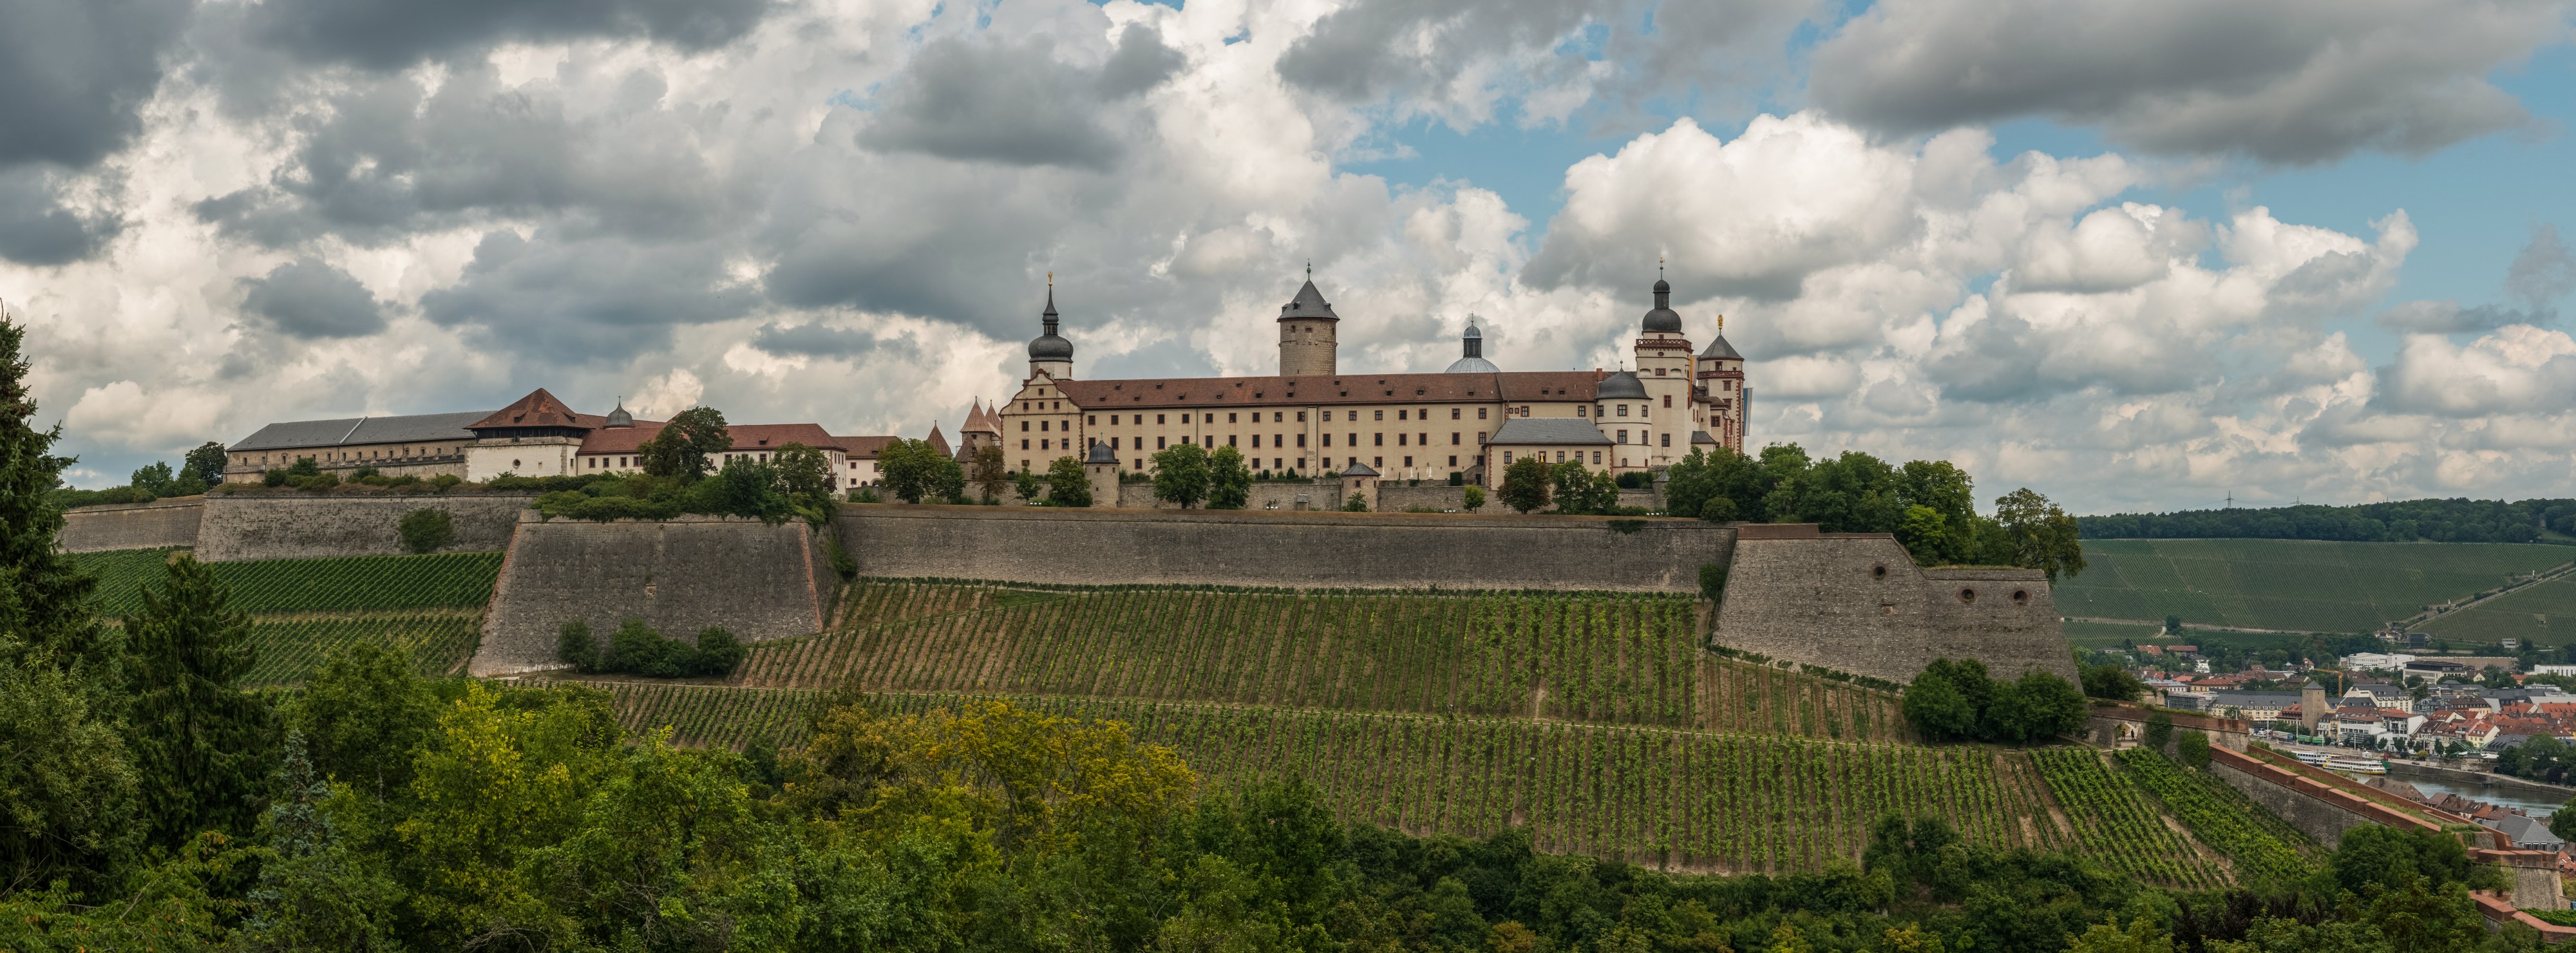 South view of Festung Marienberg, Würzburg 20140804 1